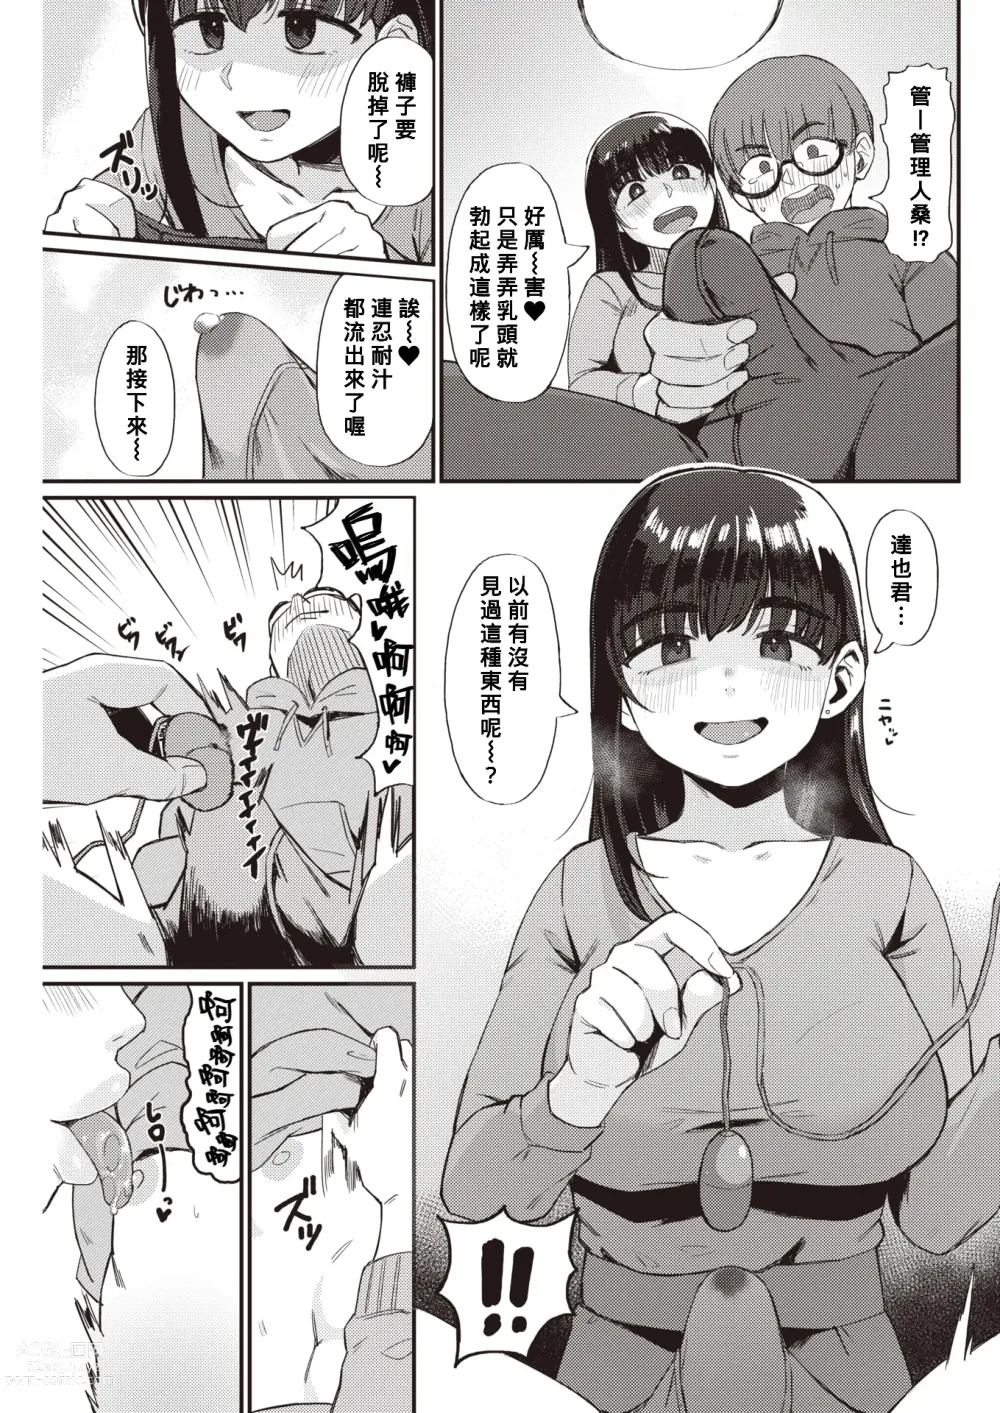 Page 7 of manga Yachin no Himitsu